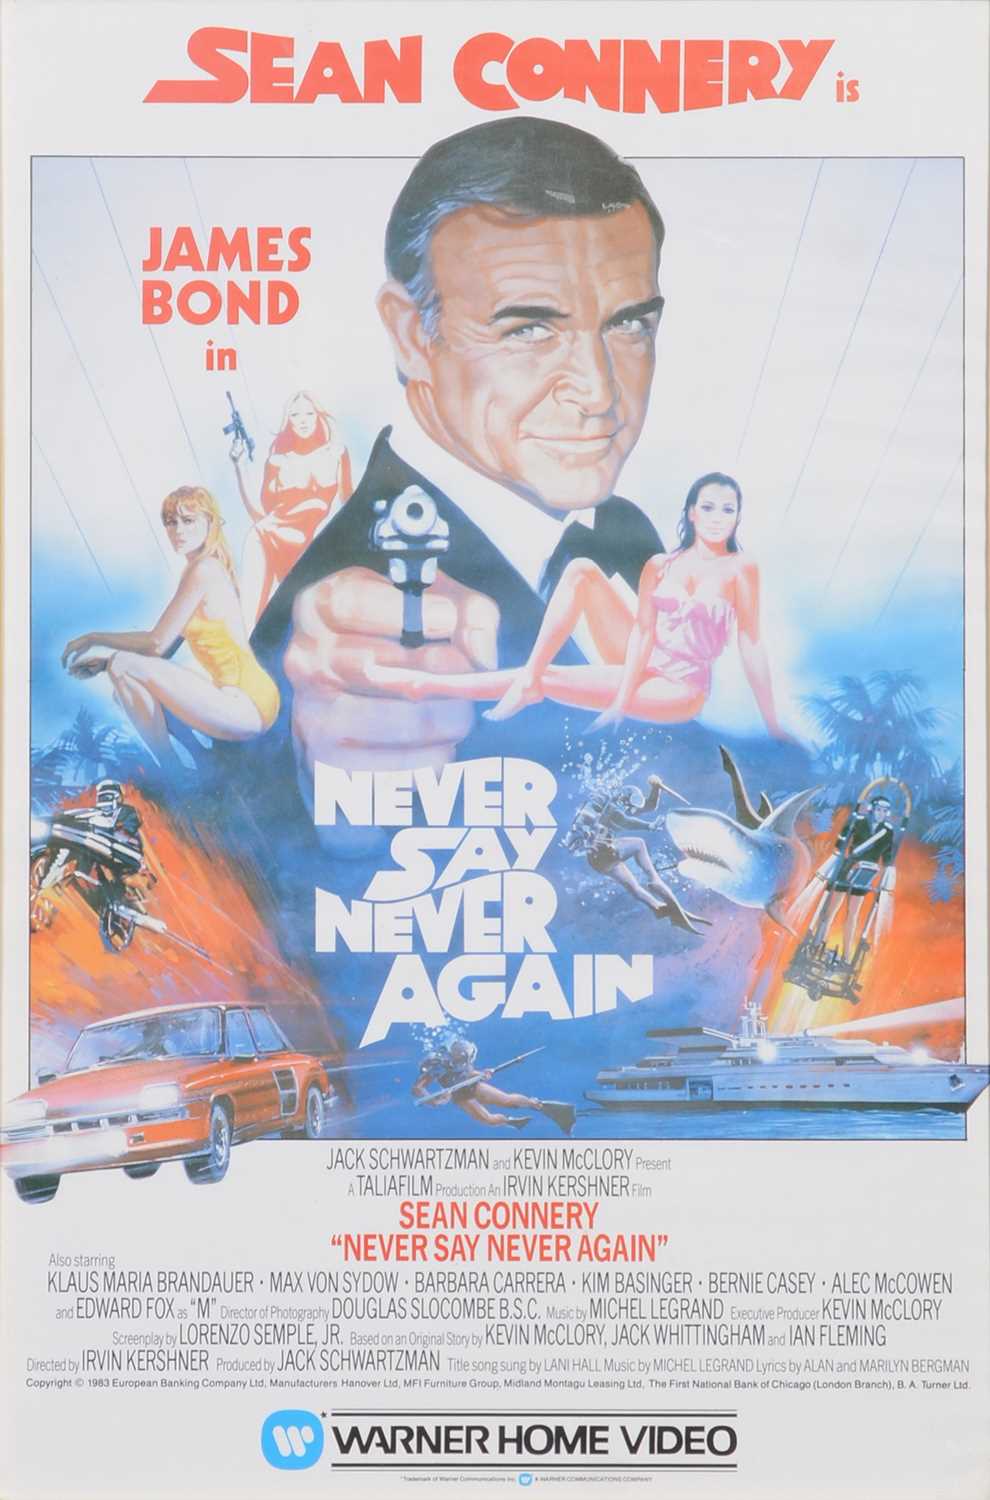 Lot 302 - Film poster, James Bond Never Say Never Again, Warner Home Video release